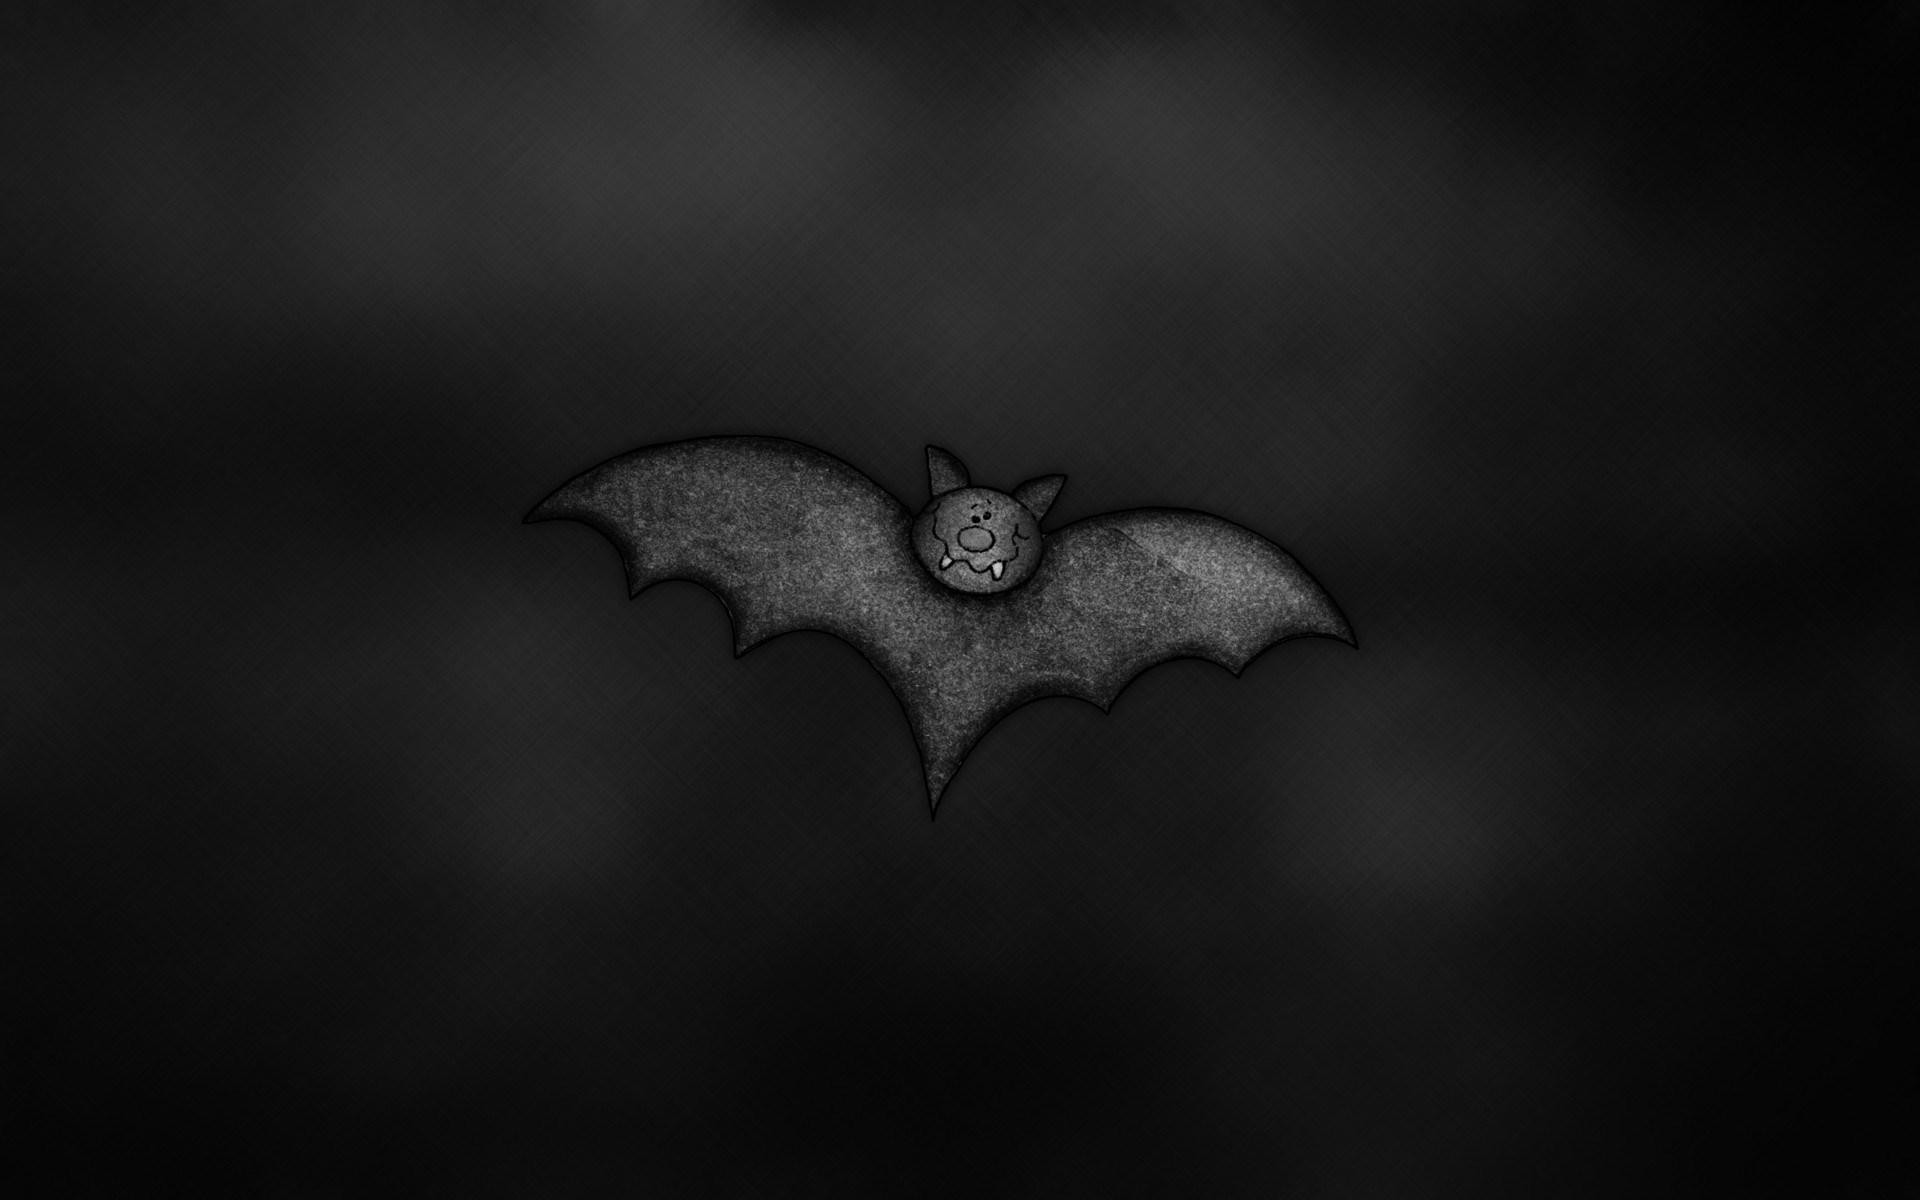 Wallpaper.wiki Funny Bat Computer Photo PIC WPC009840